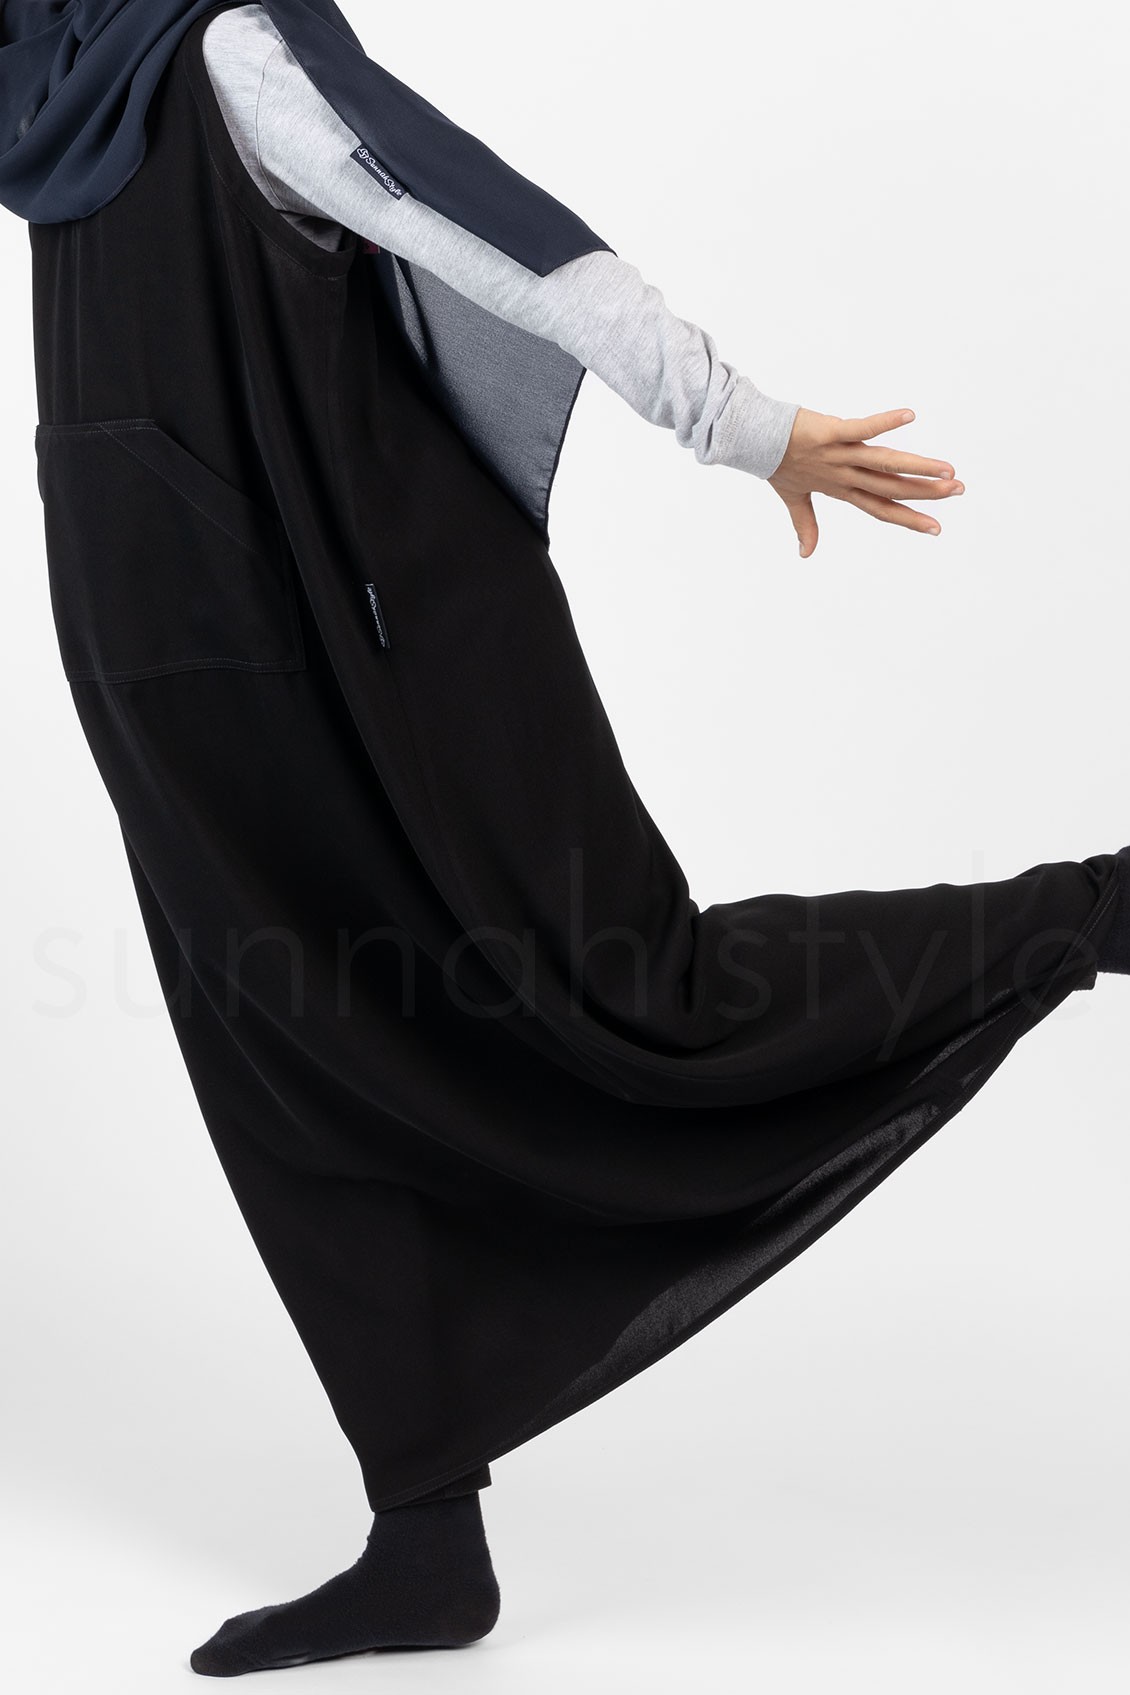 Sunnah Style Girls Essentials Sleeveless Abaya Black